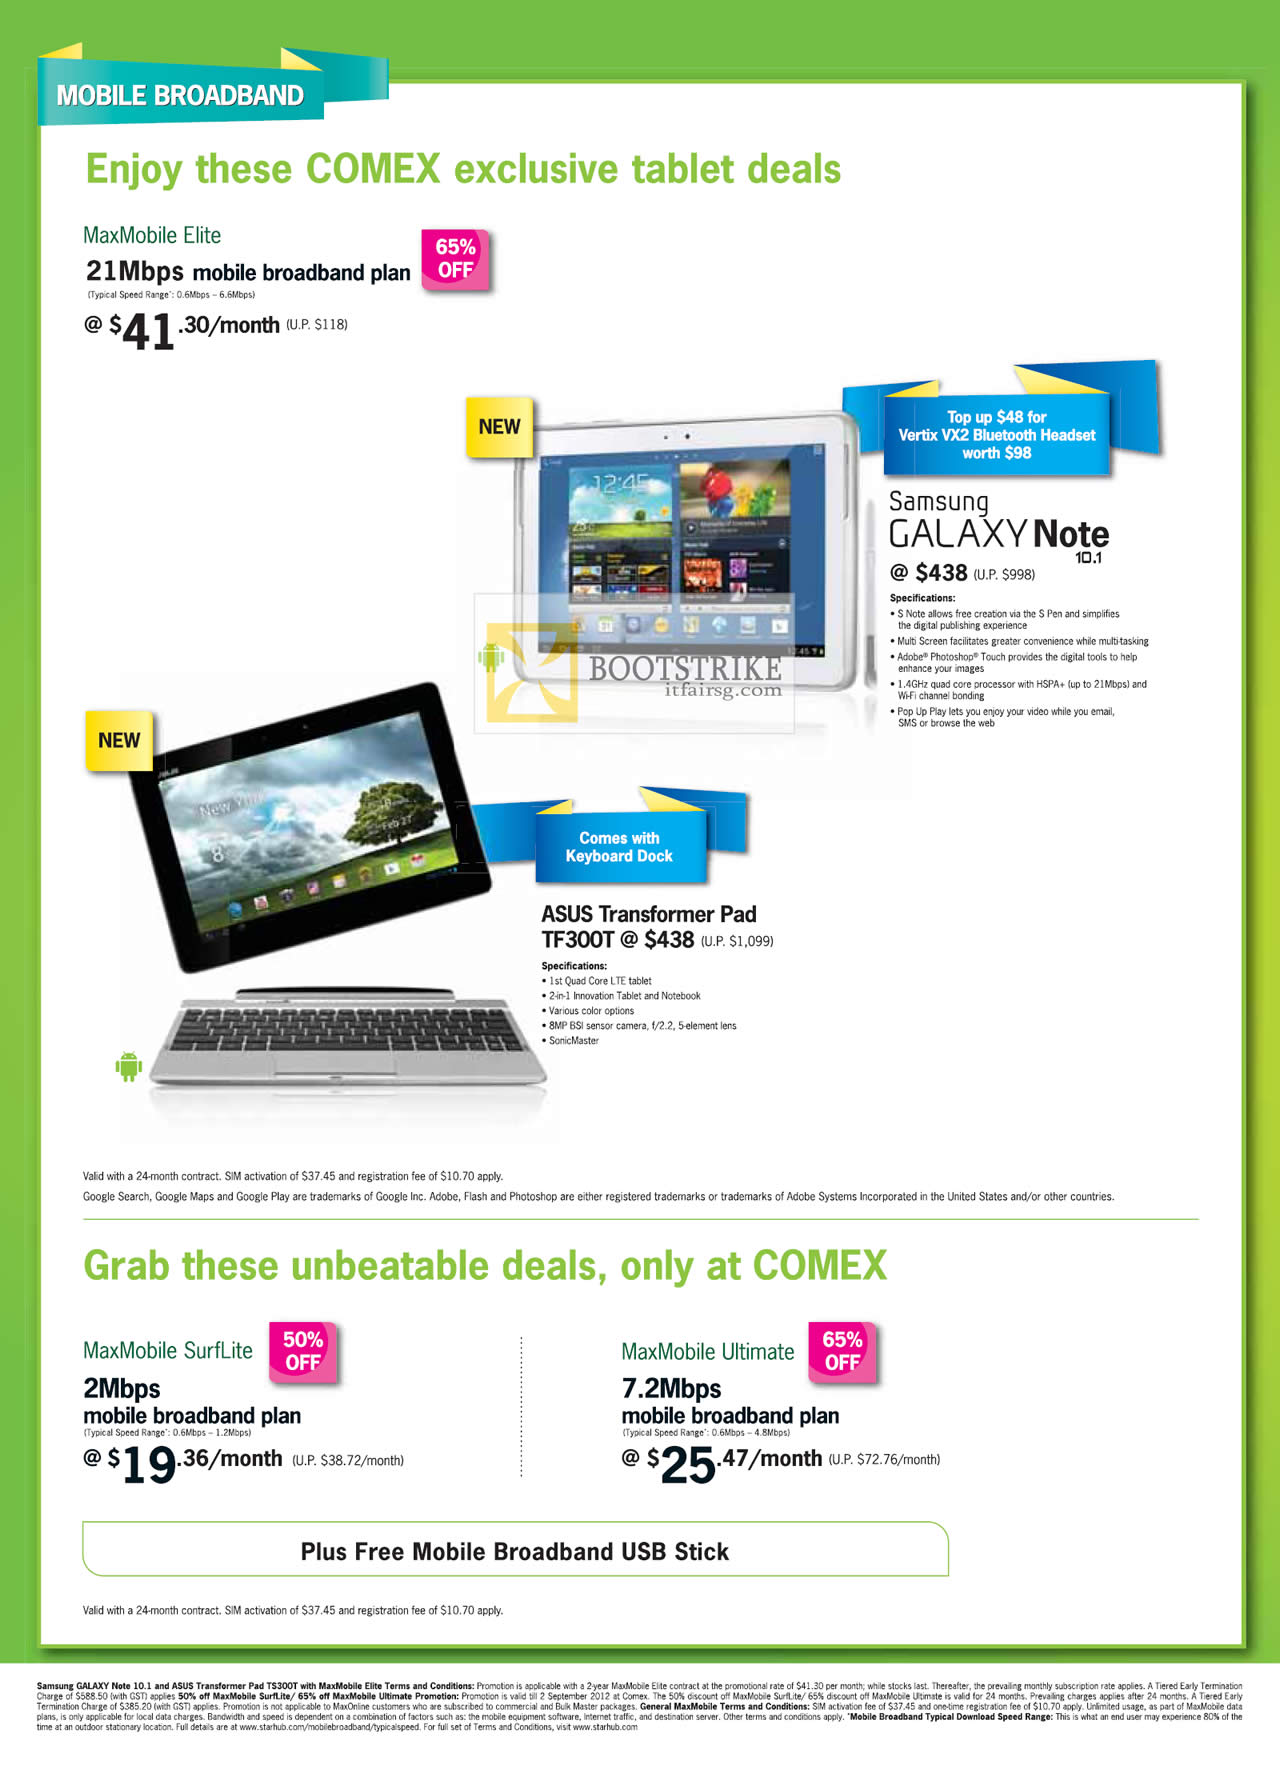 COMEX 2012 price list image brochure of Starhub Mobile Broadband MaxMobile Elite, Samsung Galaxy Note 10.1, ASUS Transformer Pad TF300T Tablet, SurfLite, Ultimate